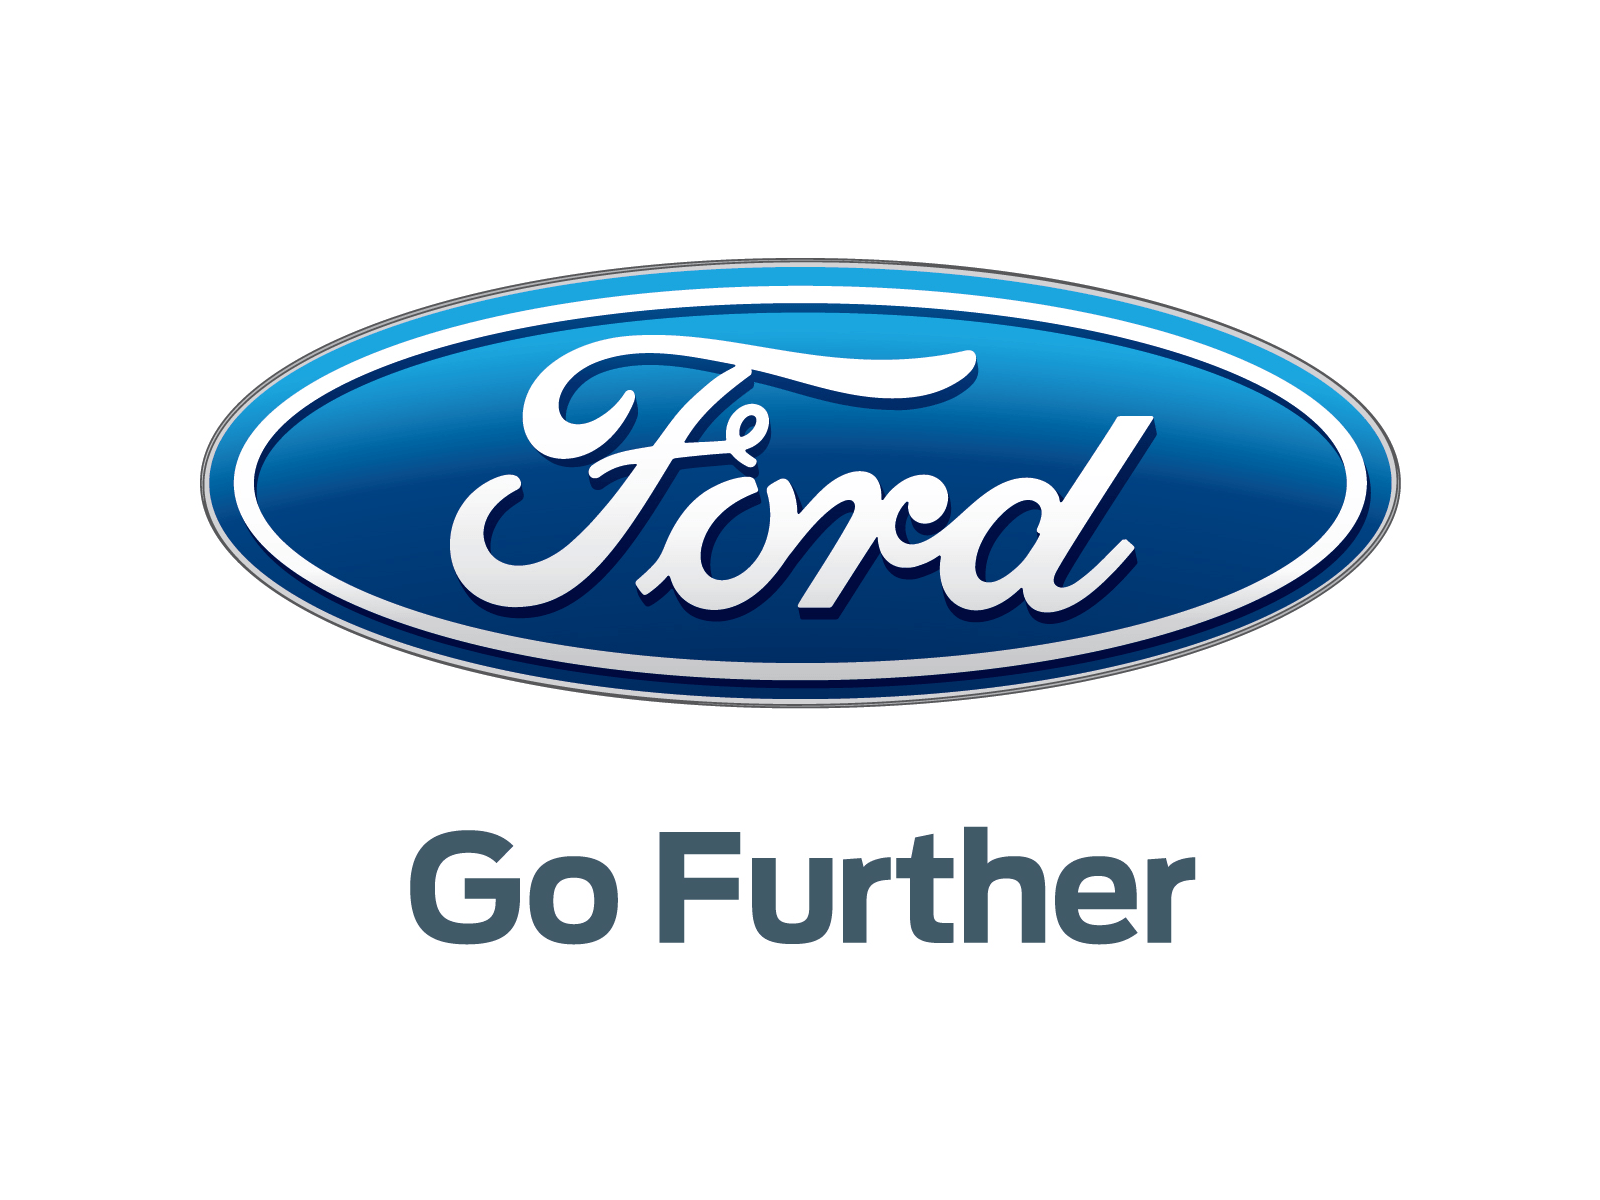 2017 Ford Logo - Ford Logo copy - AAMC